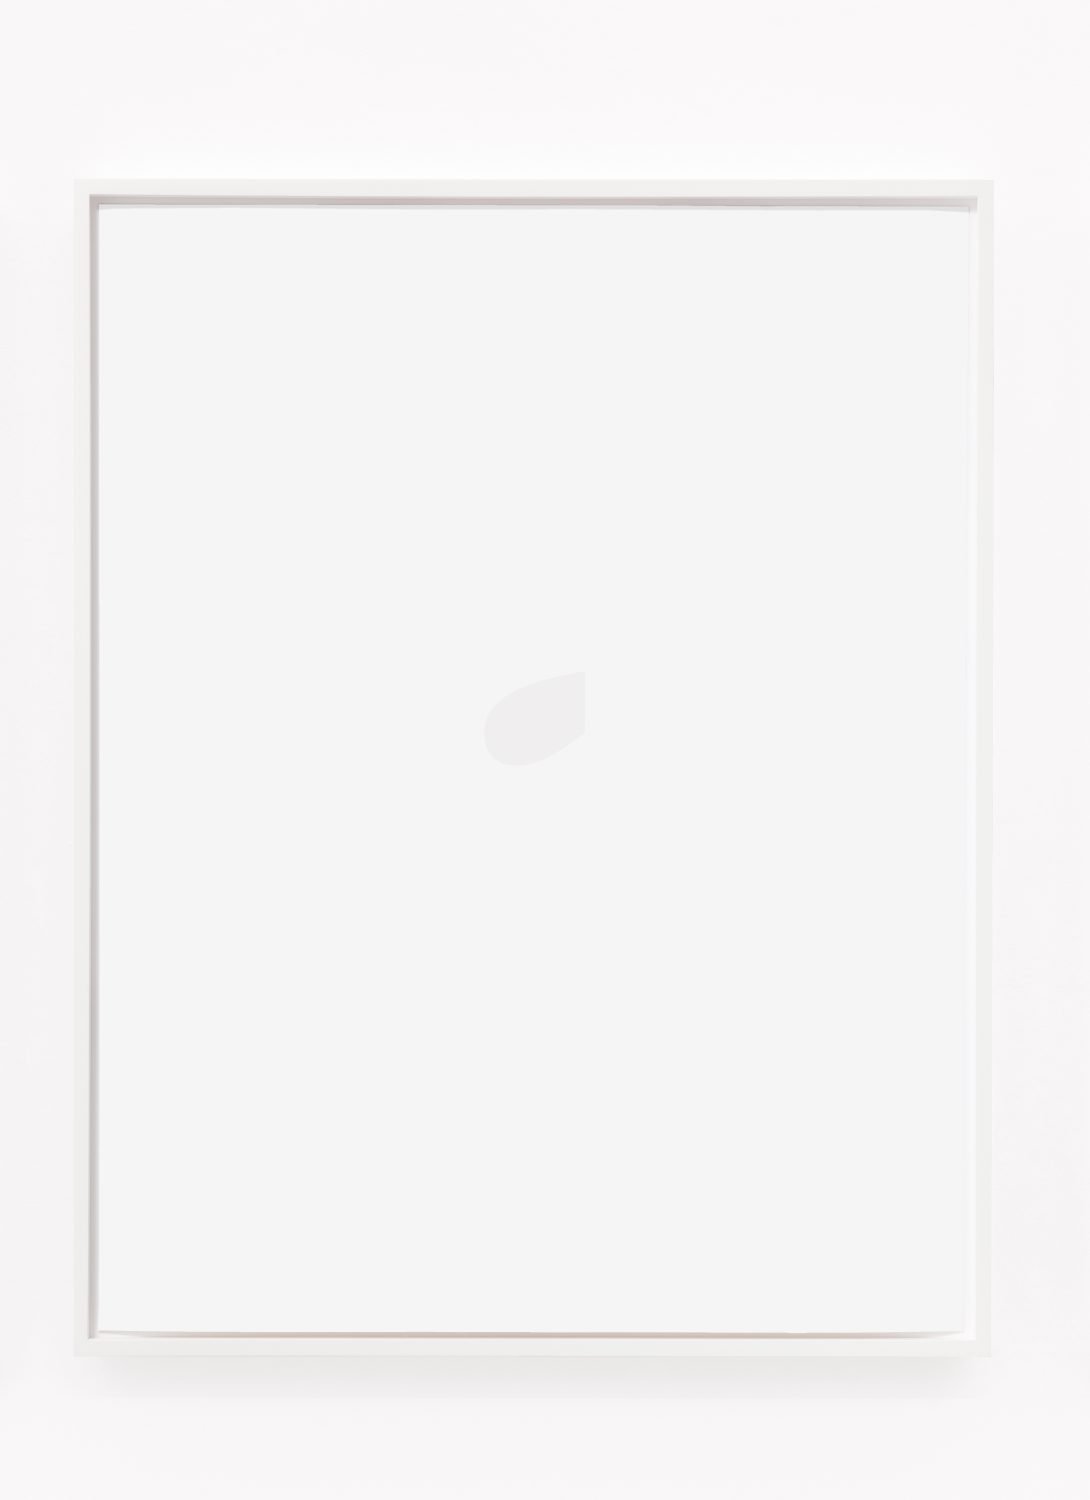 Lisa HolzerUntitled (a objet petit a / monochrom weiss), 2011Pigment print on cotton paper52.5 x 70 cm